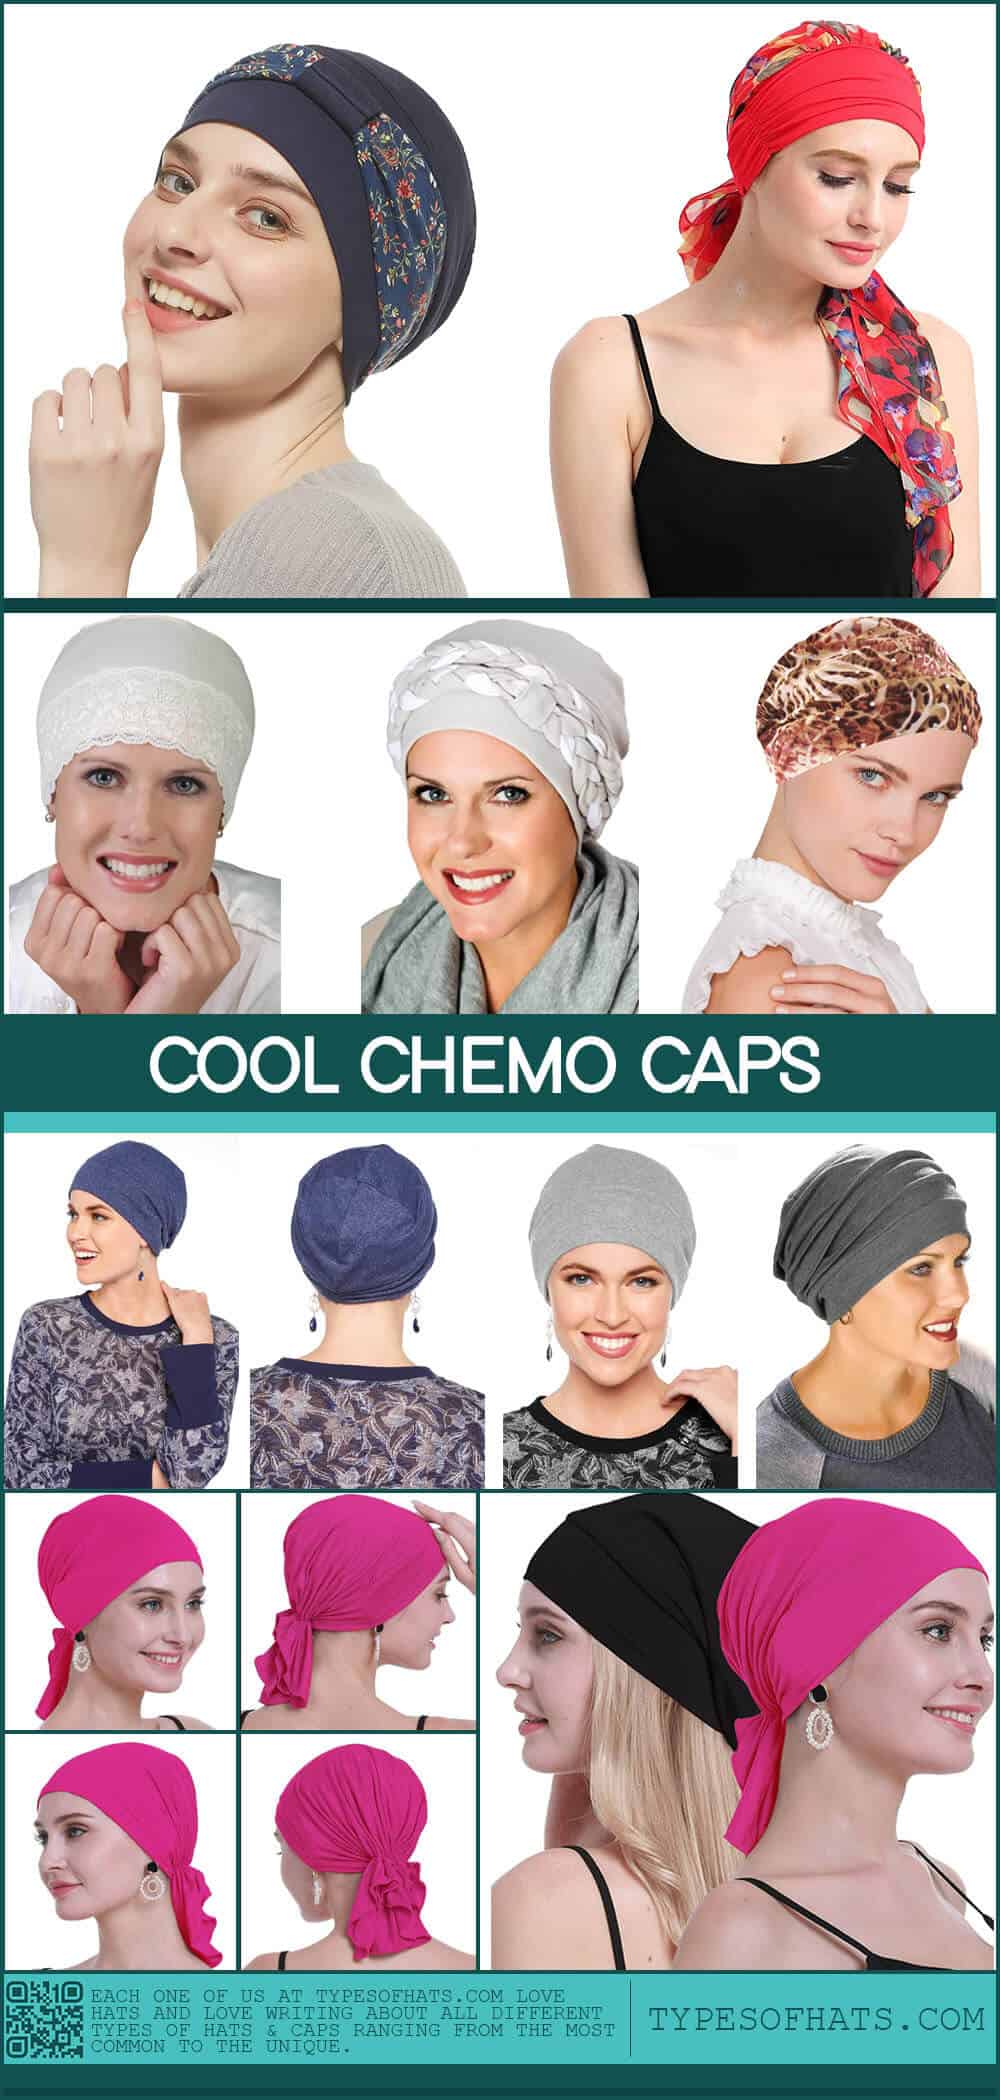 Chemo Caps for women